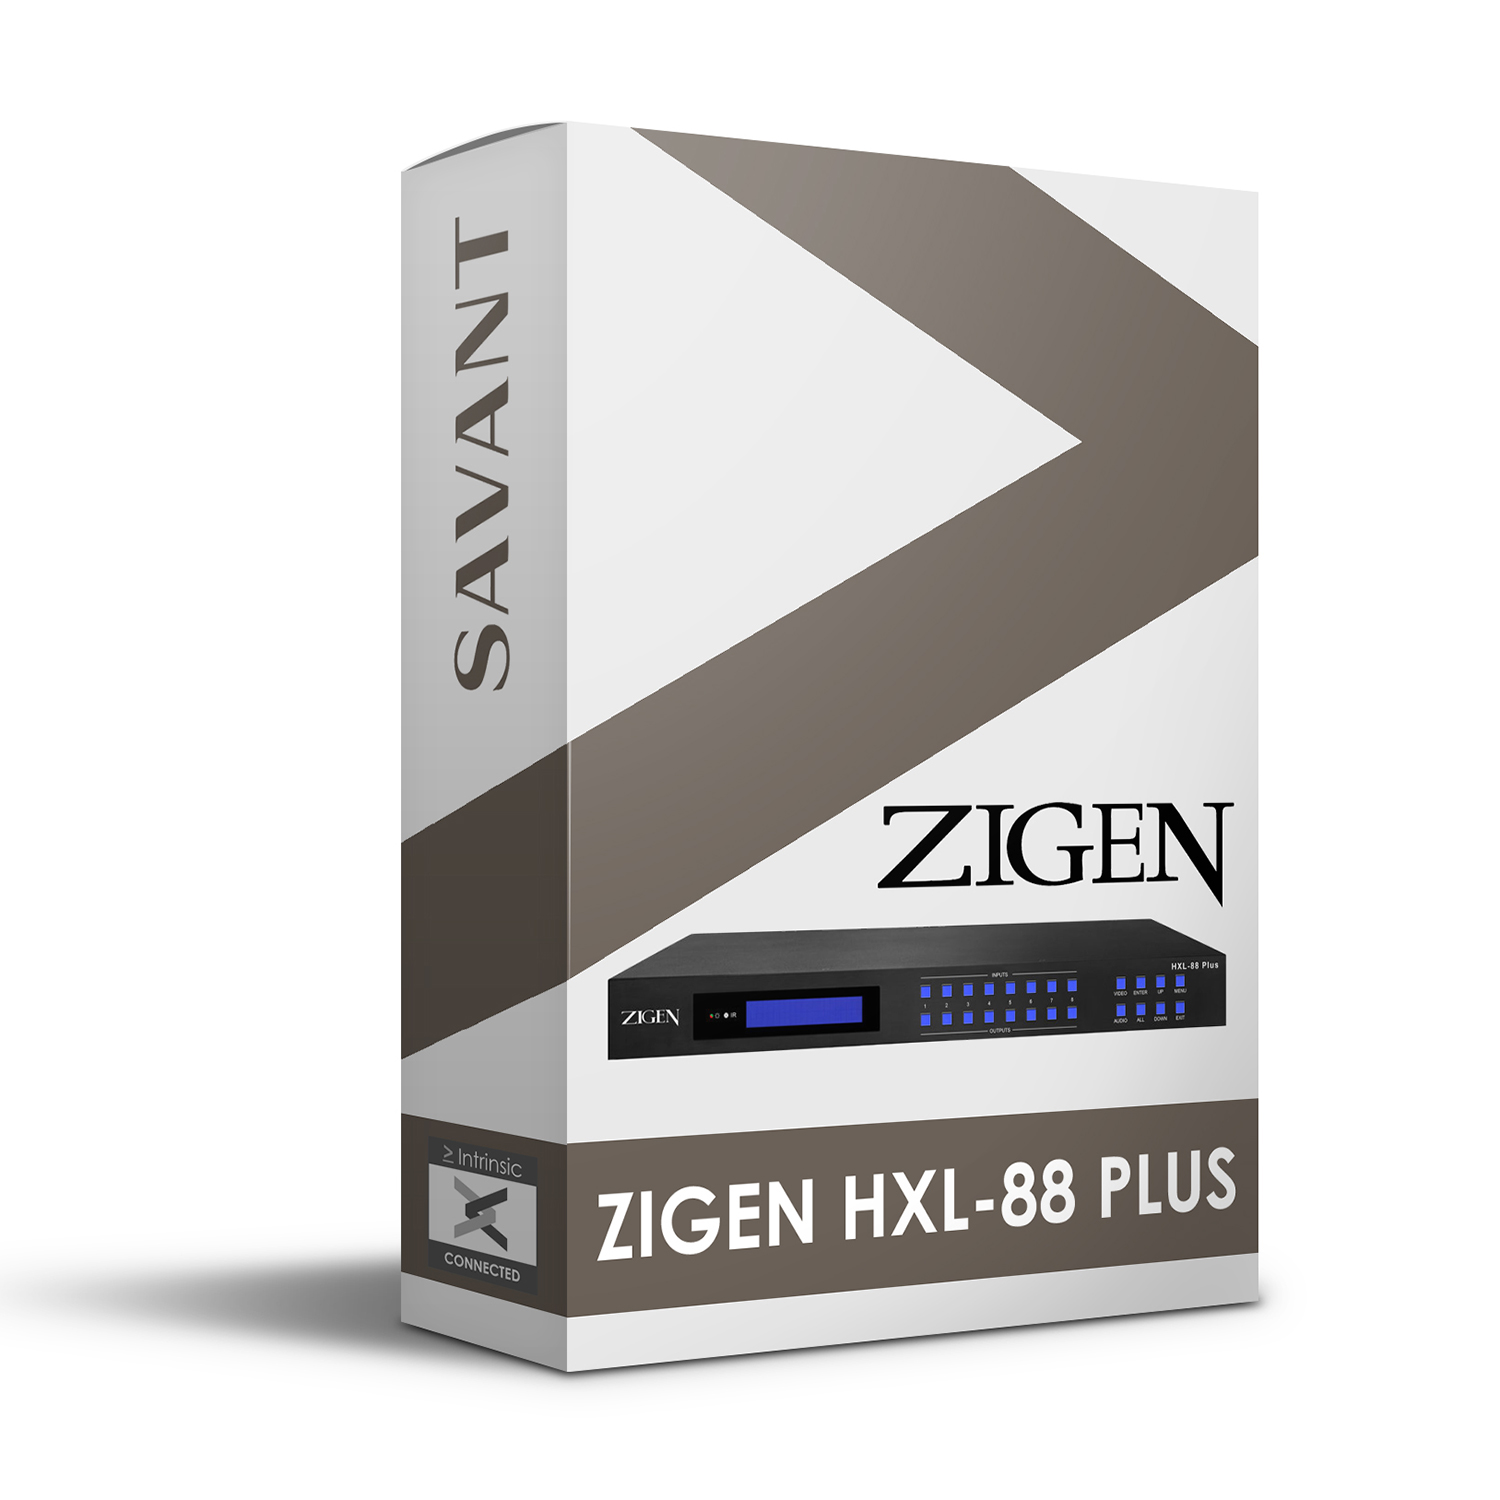 Zigen HXL-88 Plus Profile for Savant